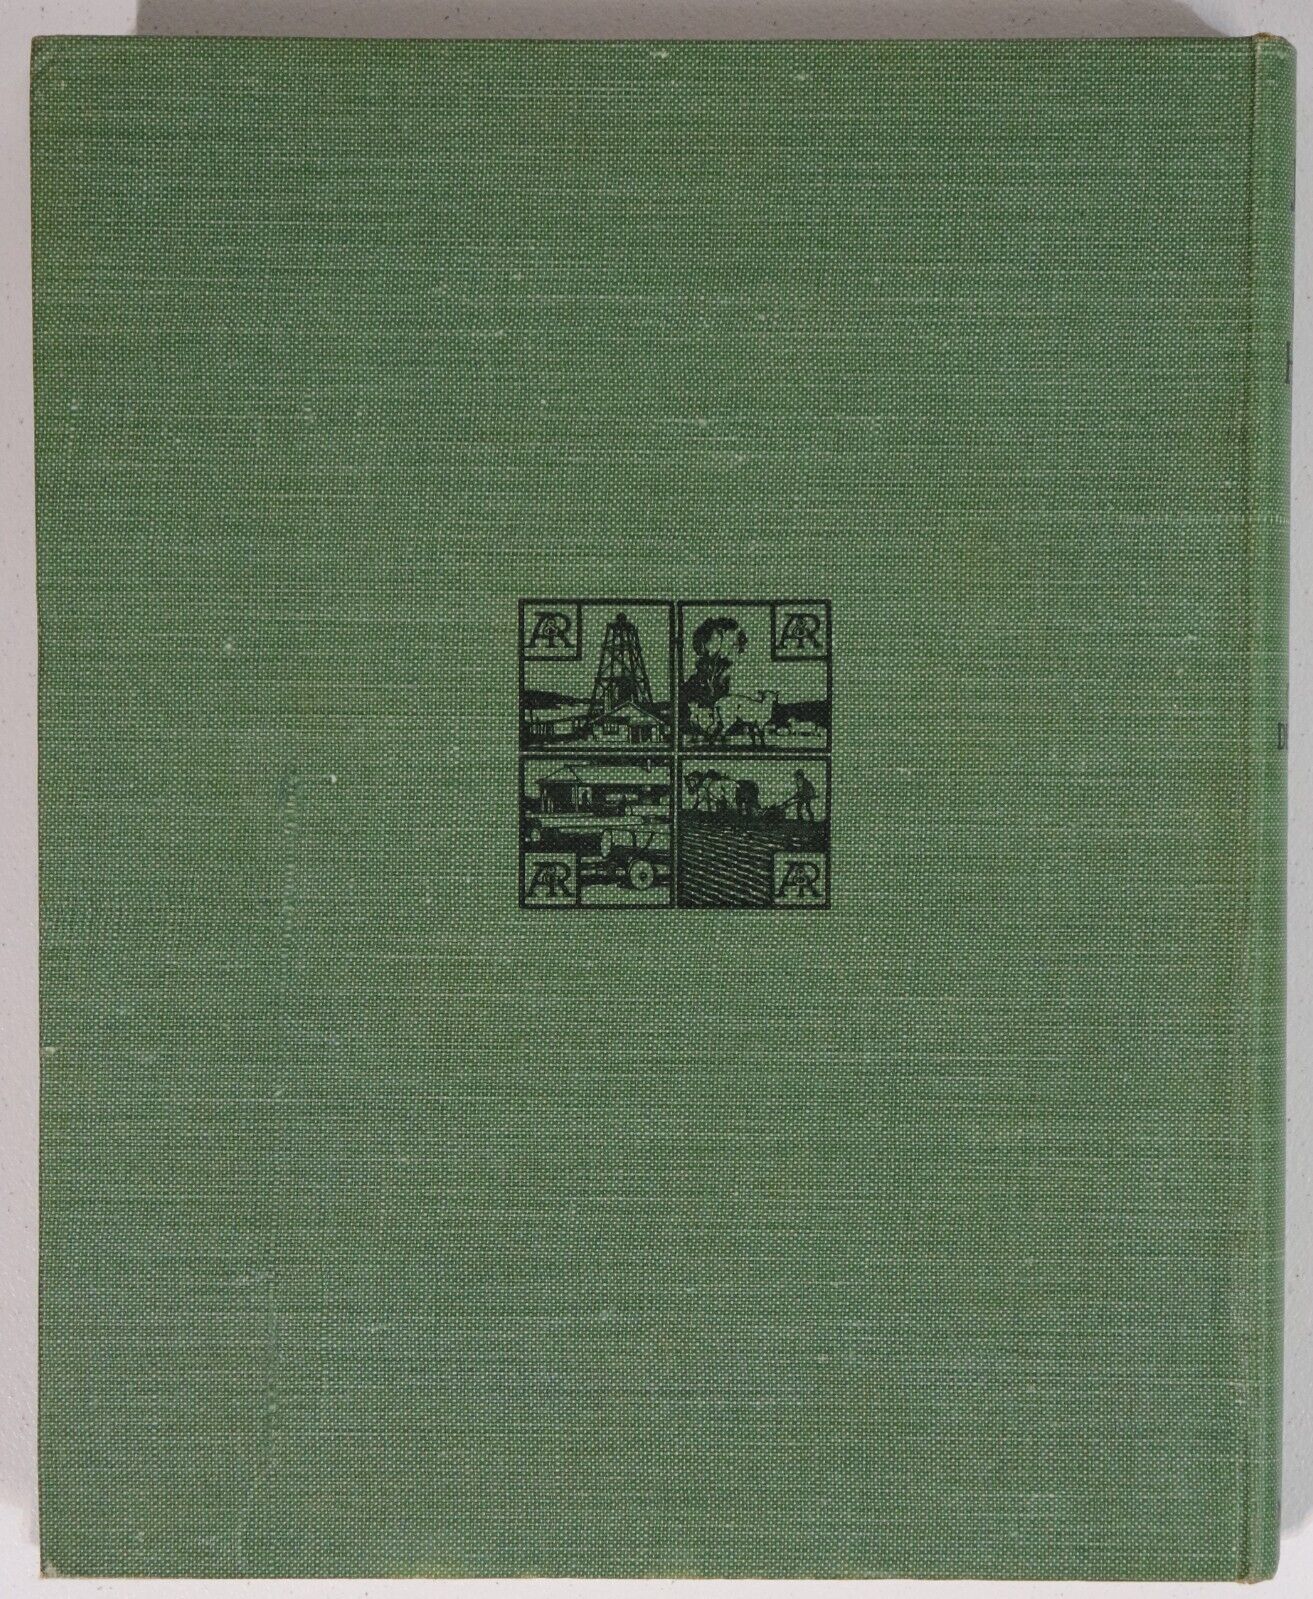 Jim Of The Hills by CJ Dennis - 1919 - 1st Edition Australian Literature Book